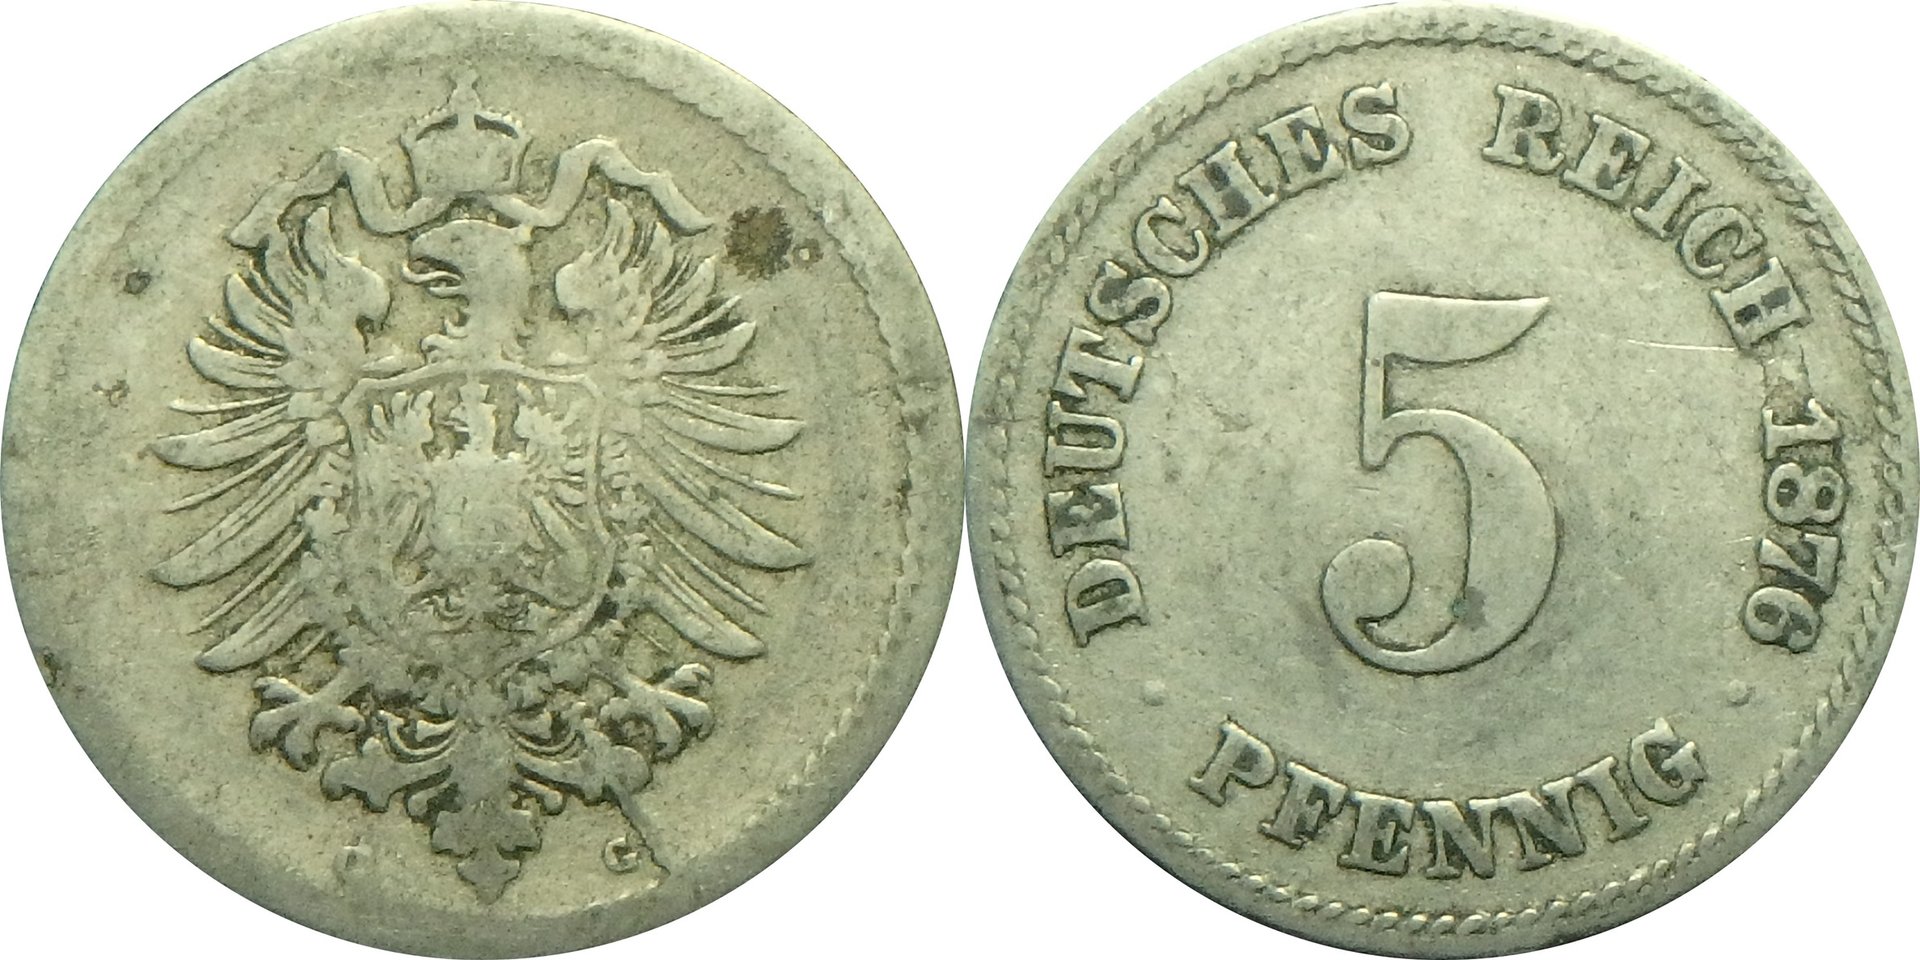 1876 DE-G 5 p.jpg